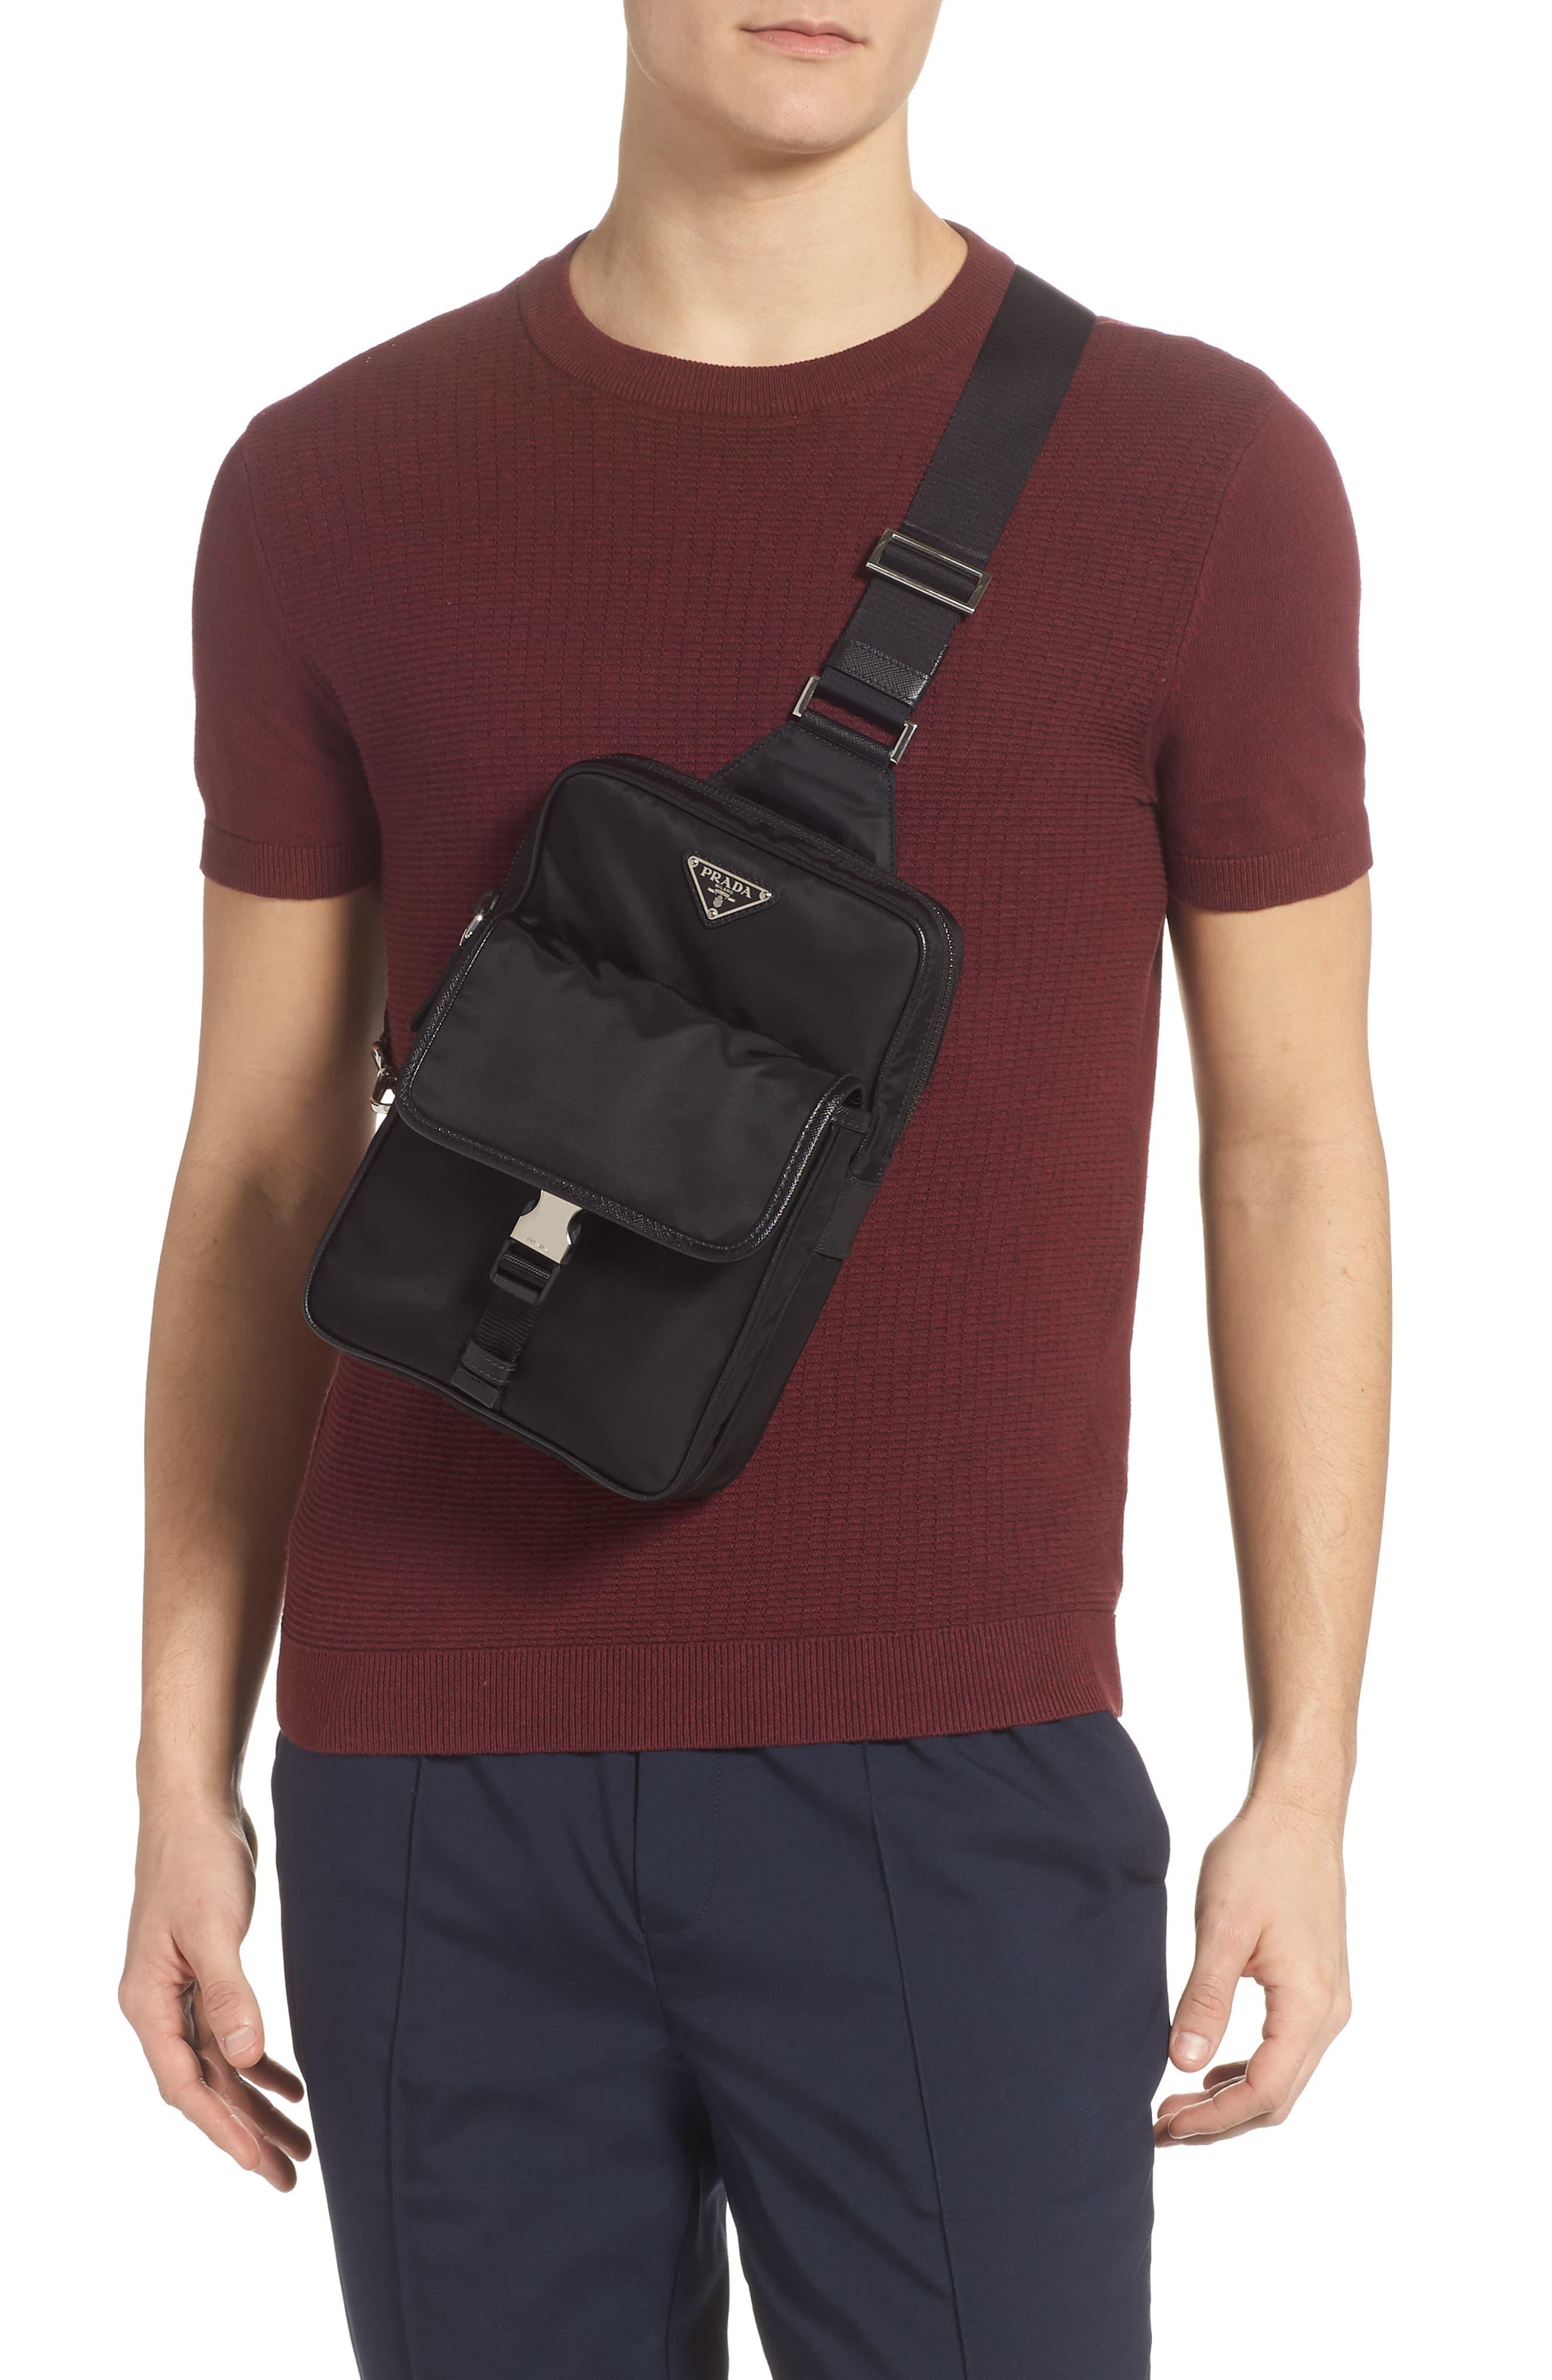 Prada Synthetic Medium Nylon Sling Bag in Nero (Black) for Men - Lyst